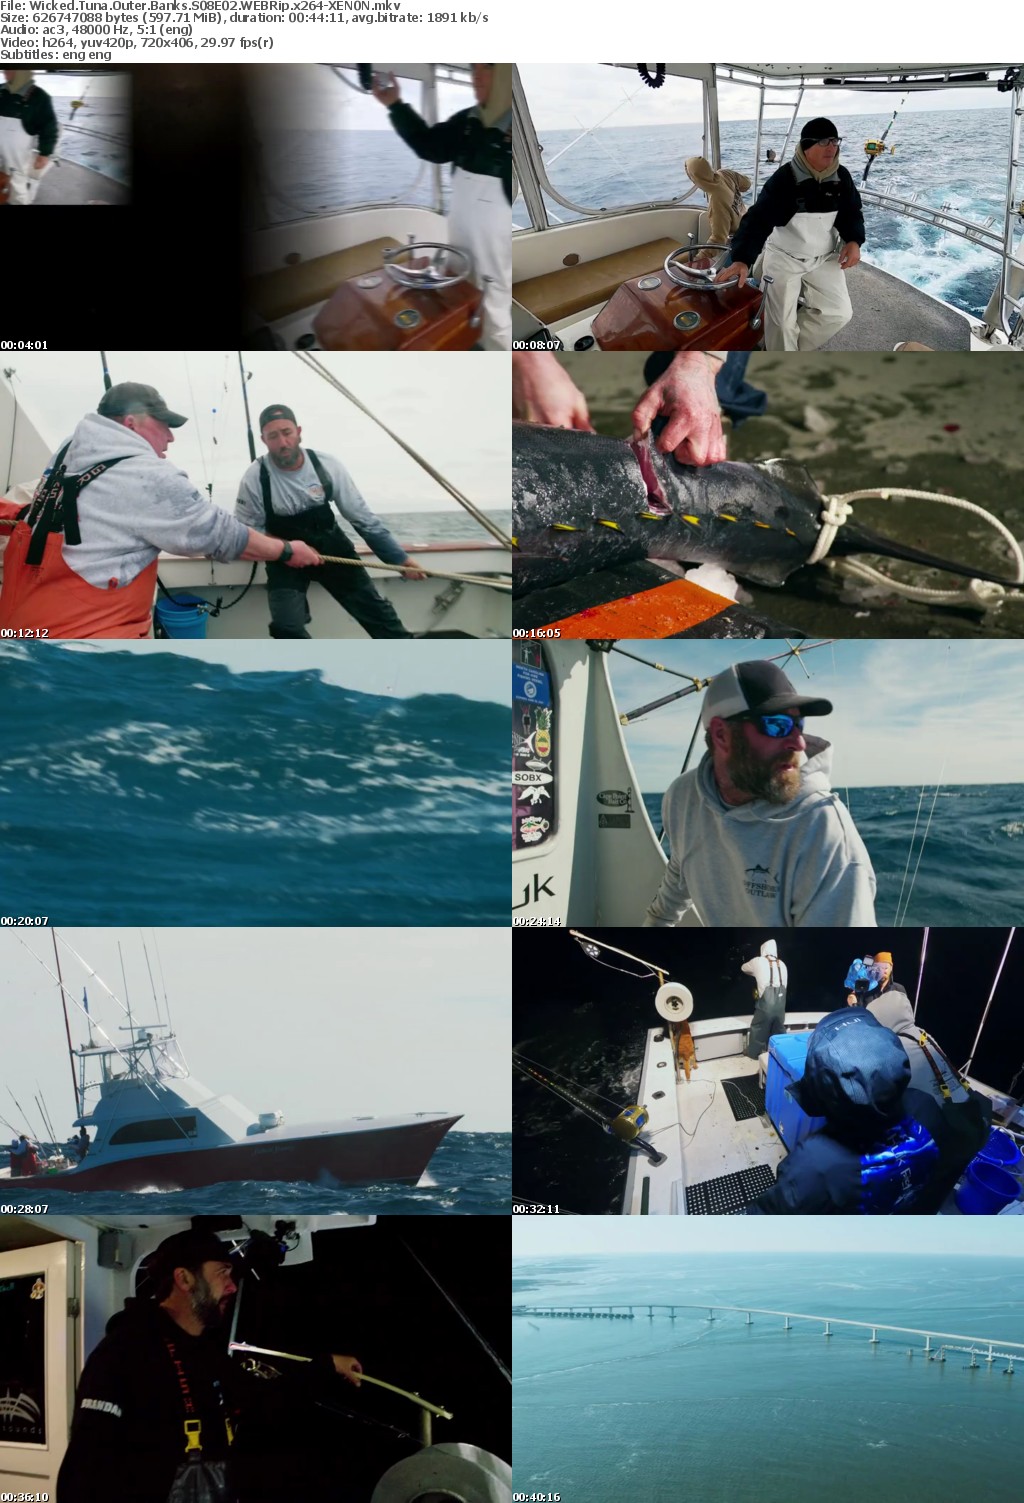 Wicked Tuna Outer Banks S08E02 WEBRip x264-XEN0N